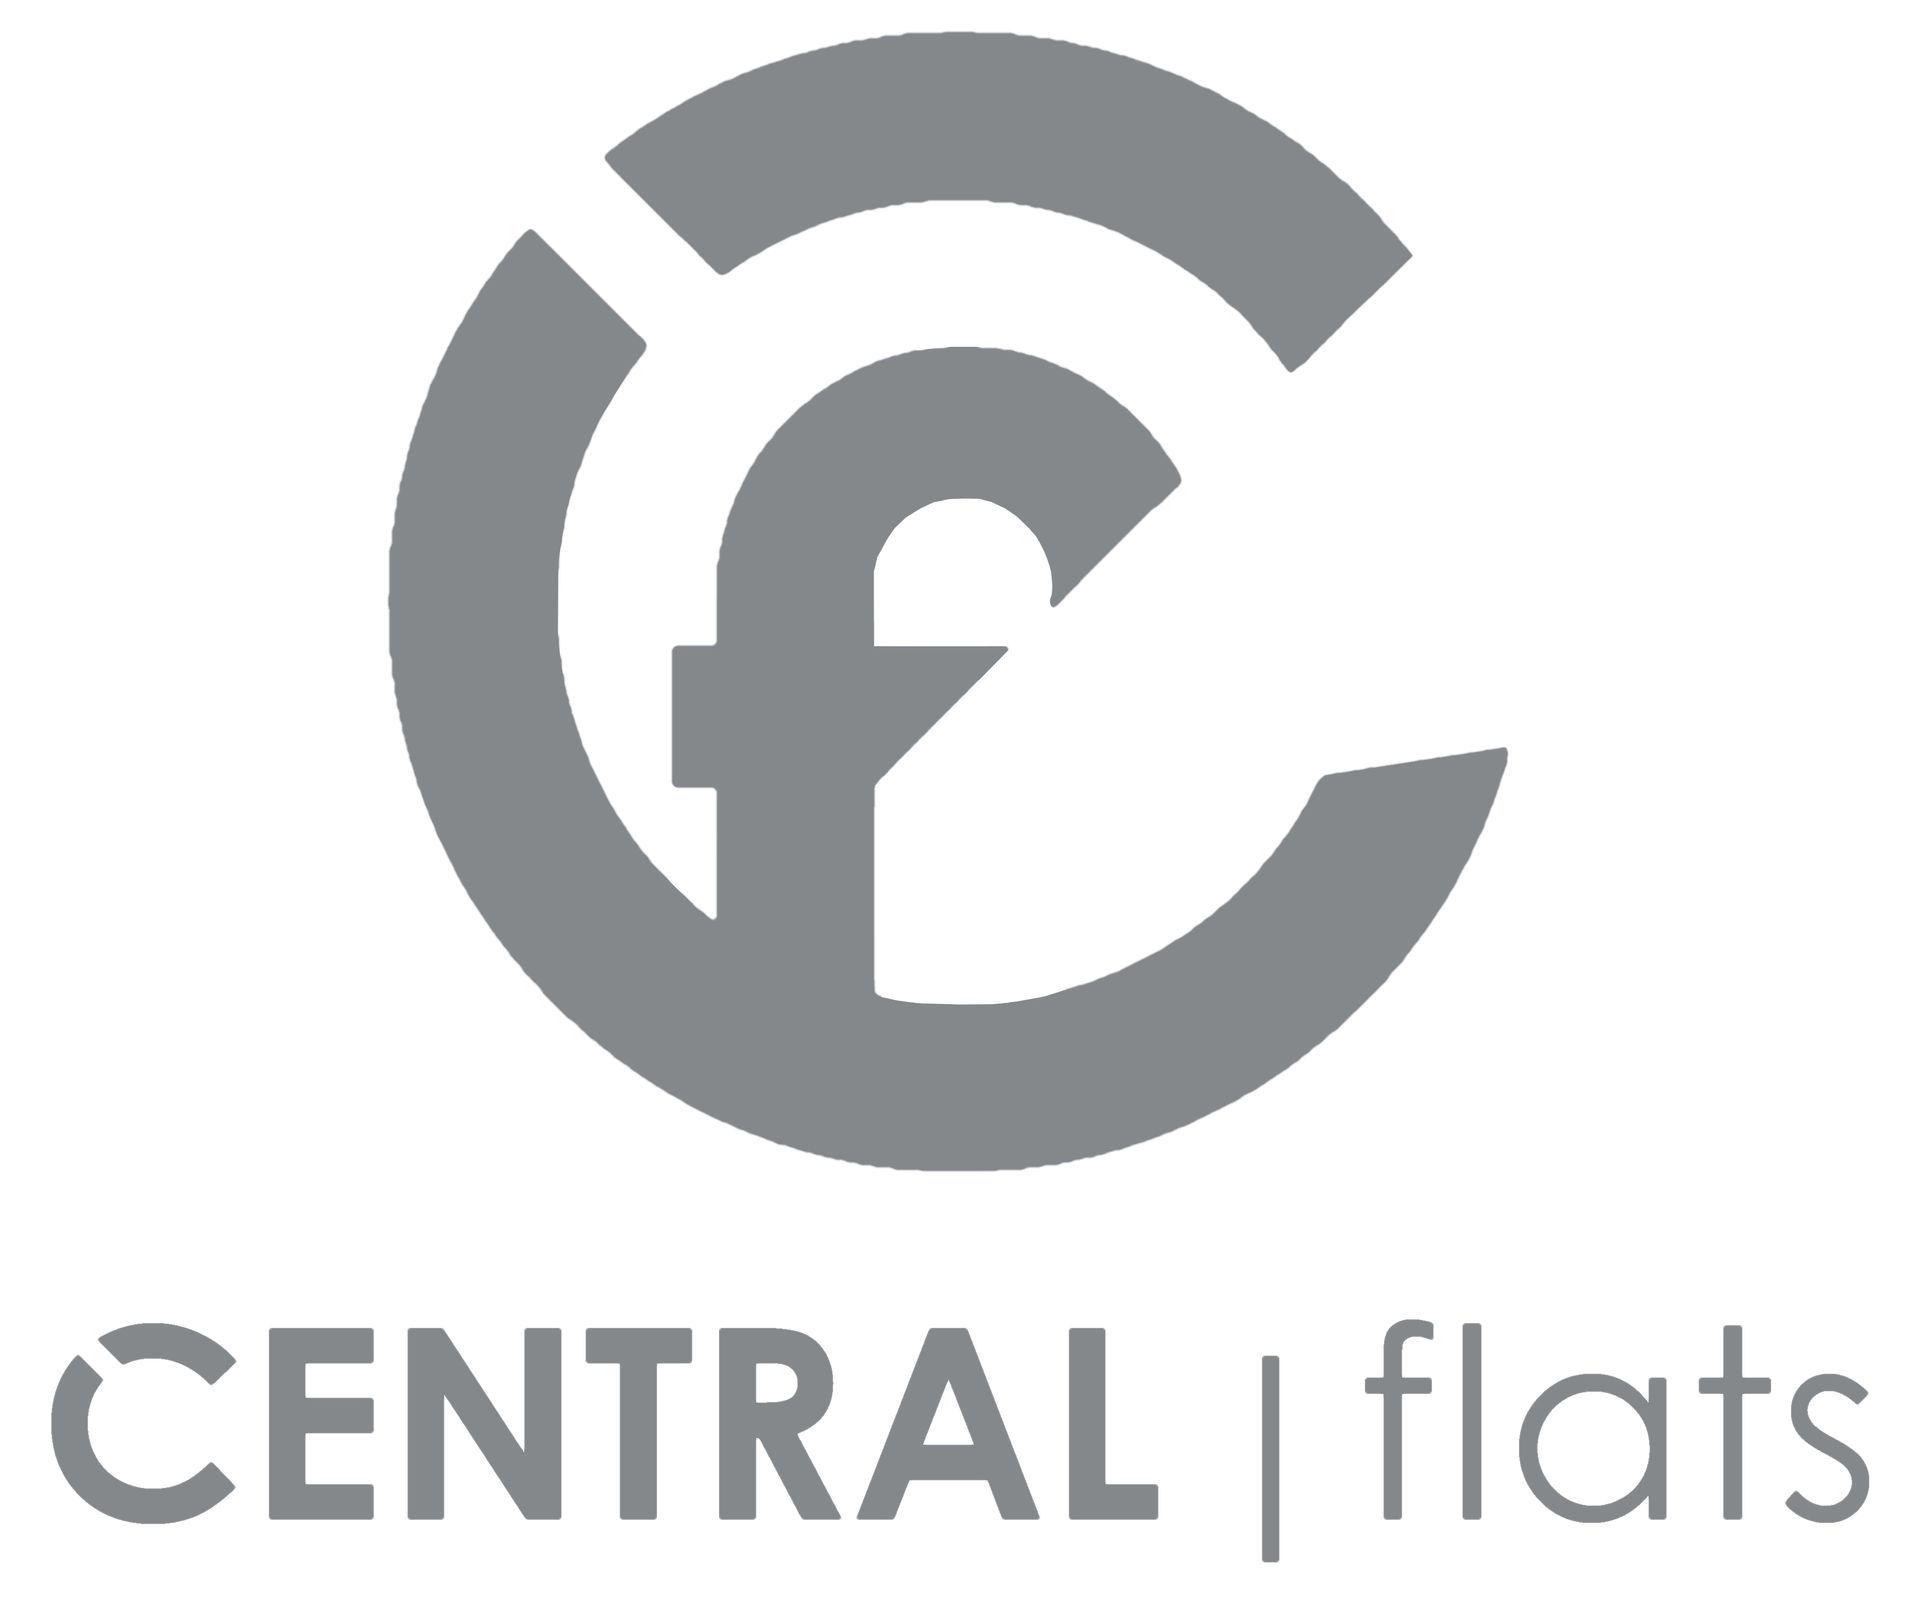 Central Flats logo grey